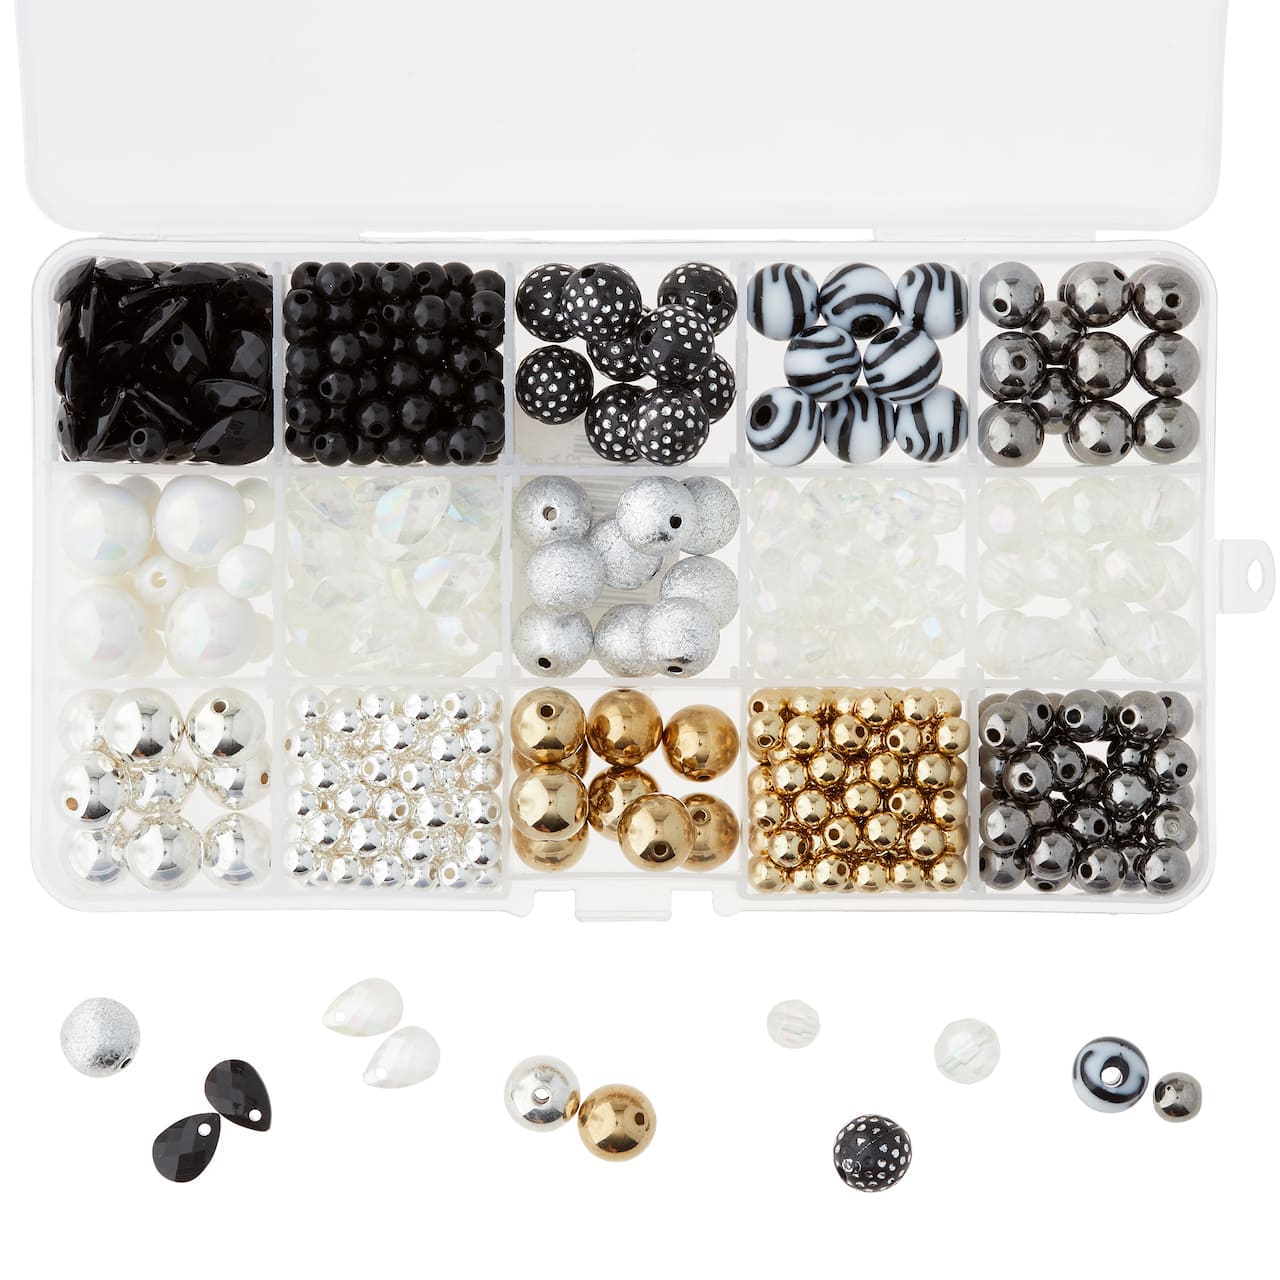 Bead Landing™ Rock Star Crafting Beads Box